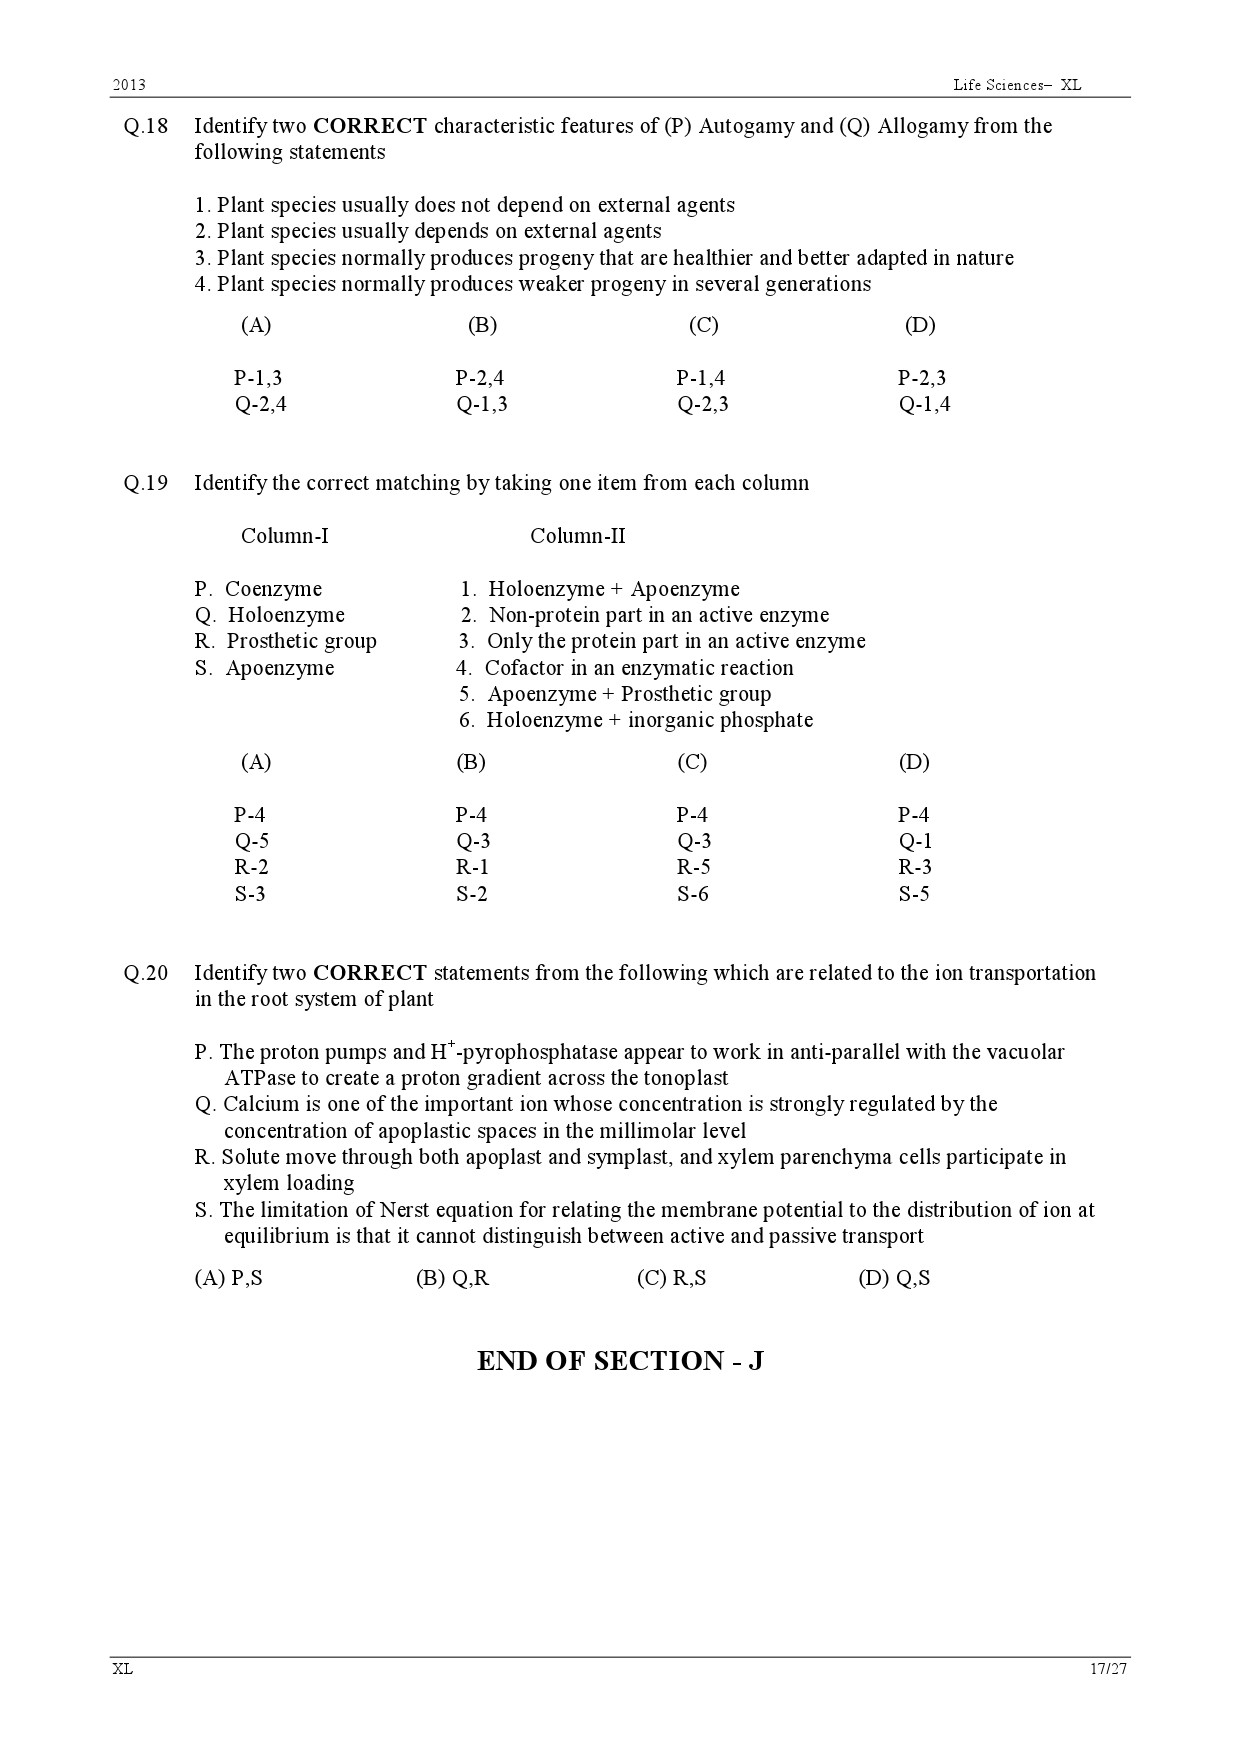 GATE Exam Question Paper 2013 Life Sciences 17